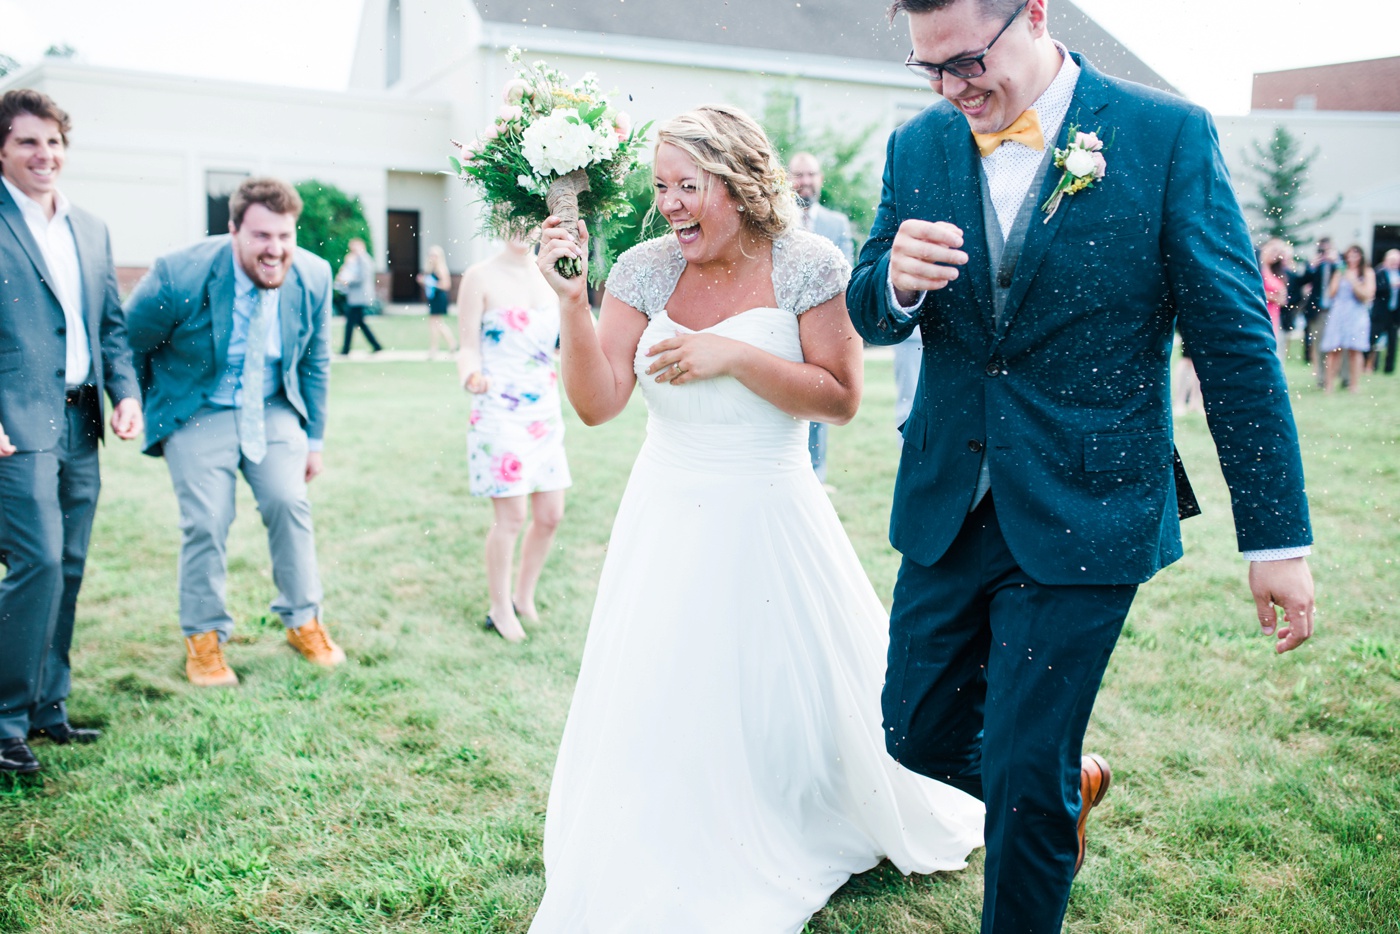 Kristen + John - Reading Pennsylvania Wedding Photographer - Alison Dunn Photography photo-86